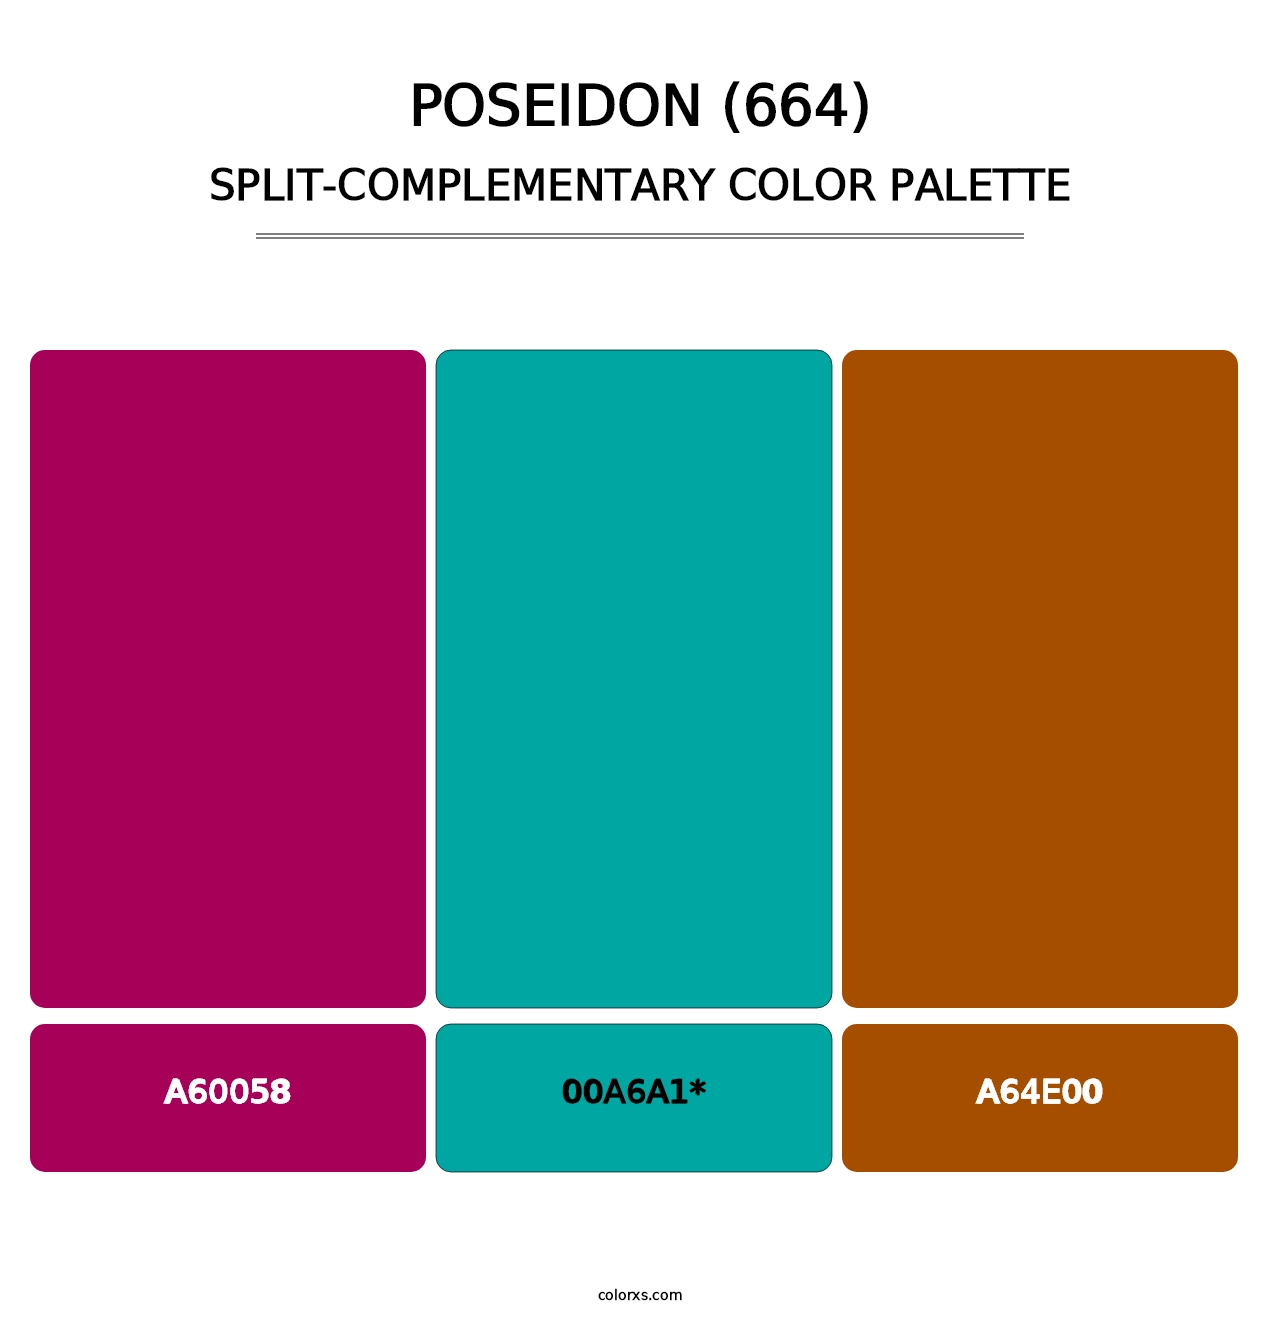 Poseidon (664) - Split-Complementary Color Palette